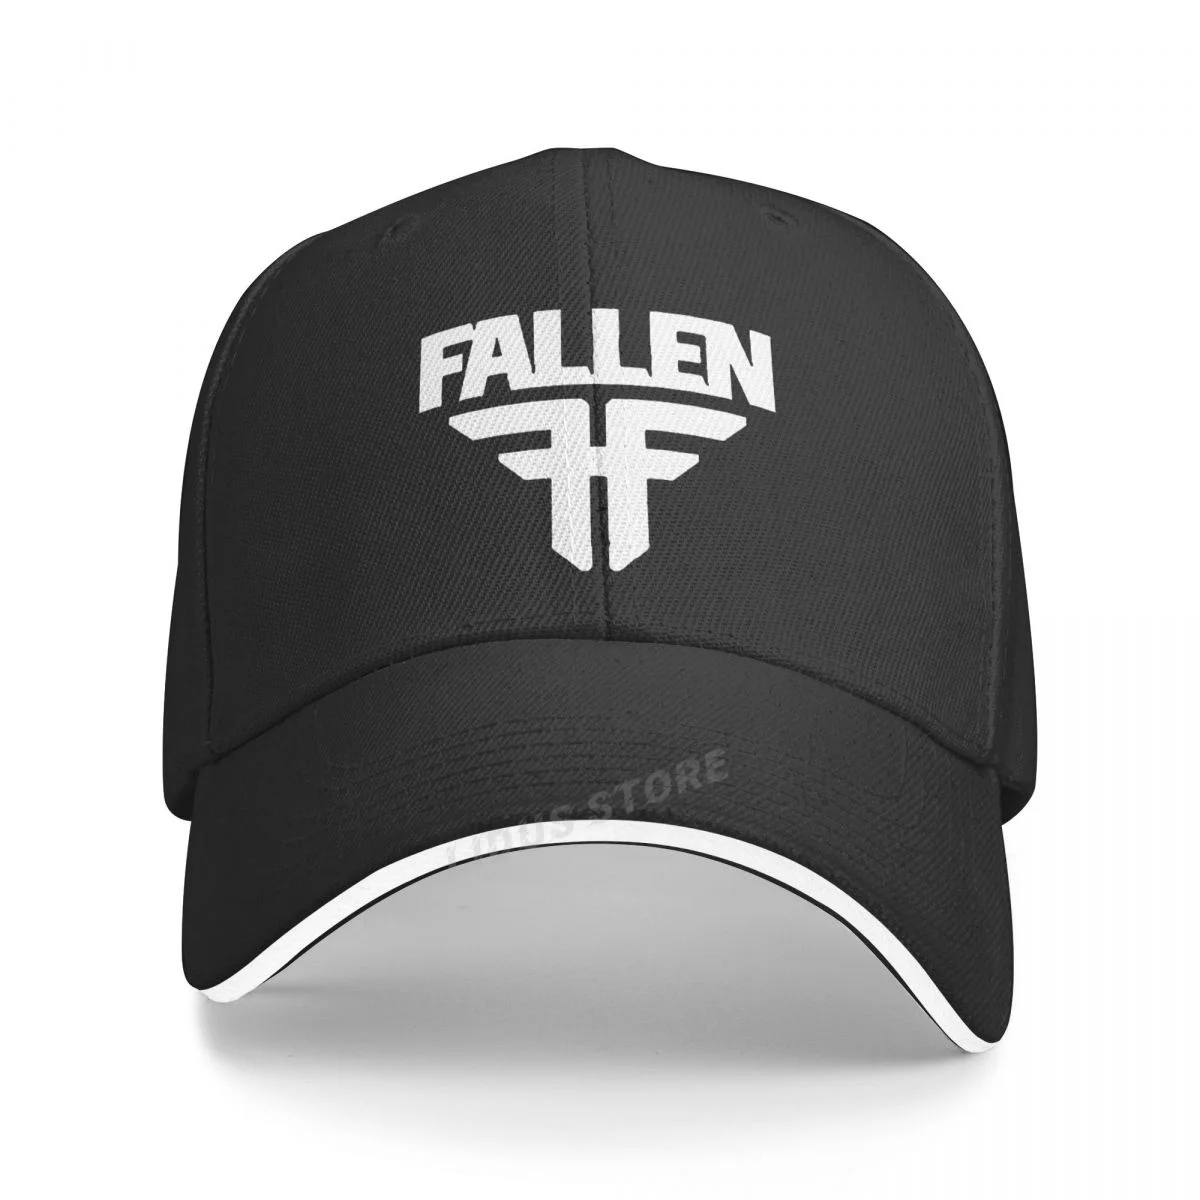 Fallen Letter Print Hat Men Music Lover Fans Hat Casual Man Women Fashion Summer Adjustable Snapback Hats Fallen Gorra